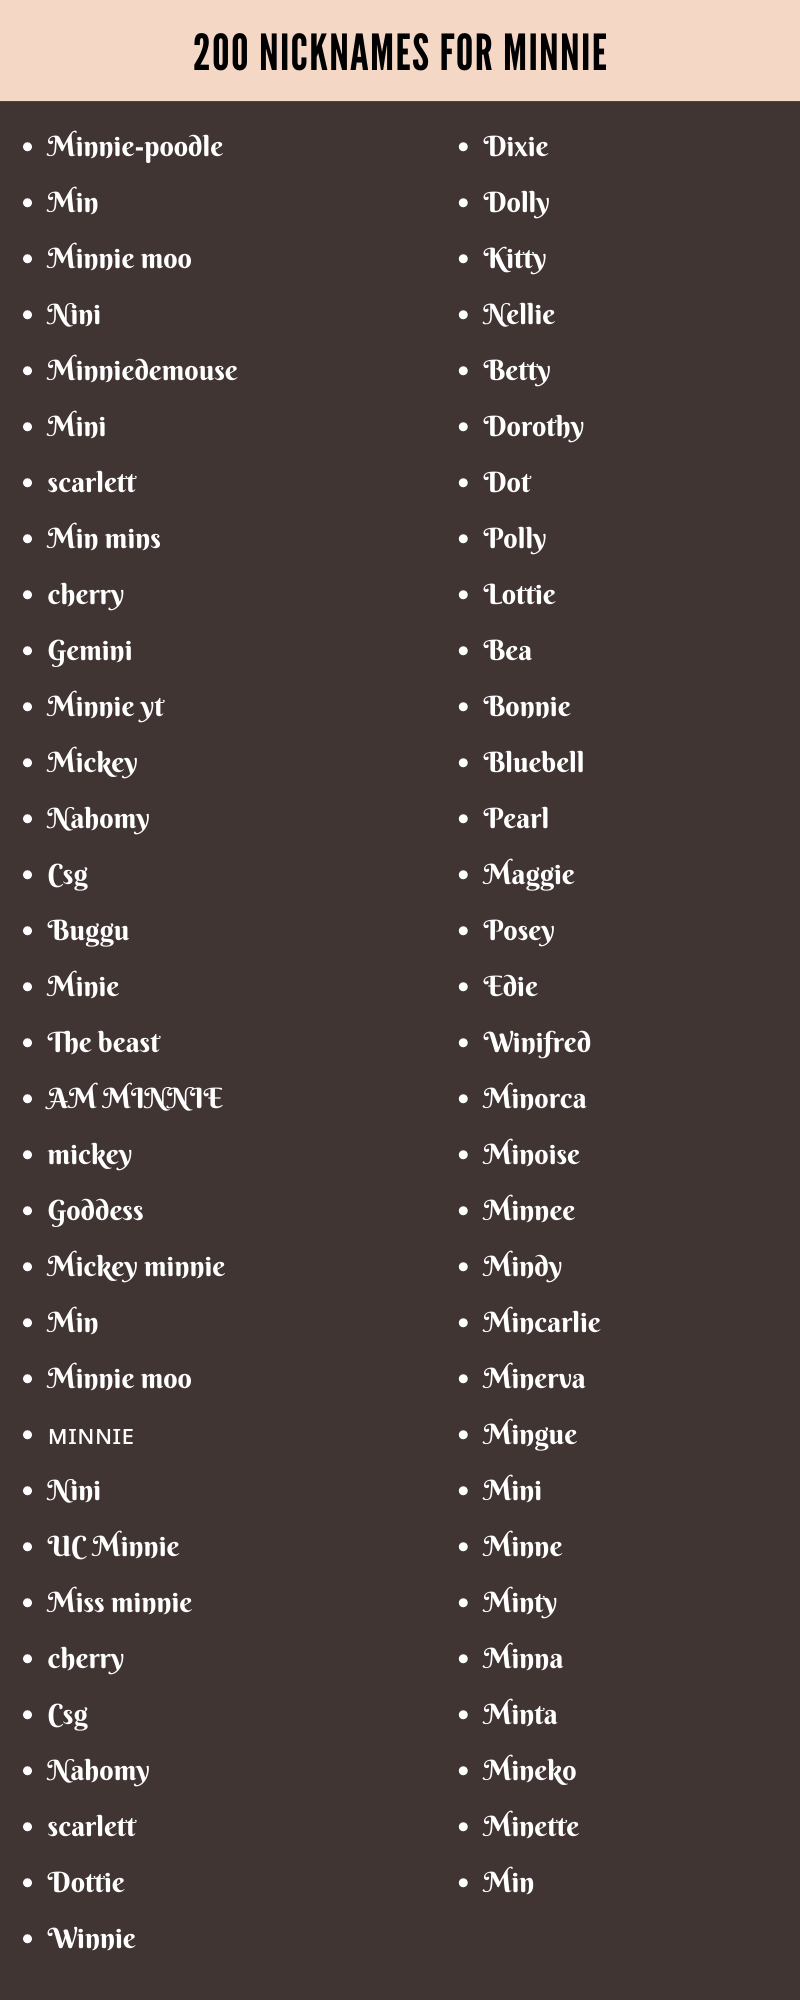  nicknames for minnie